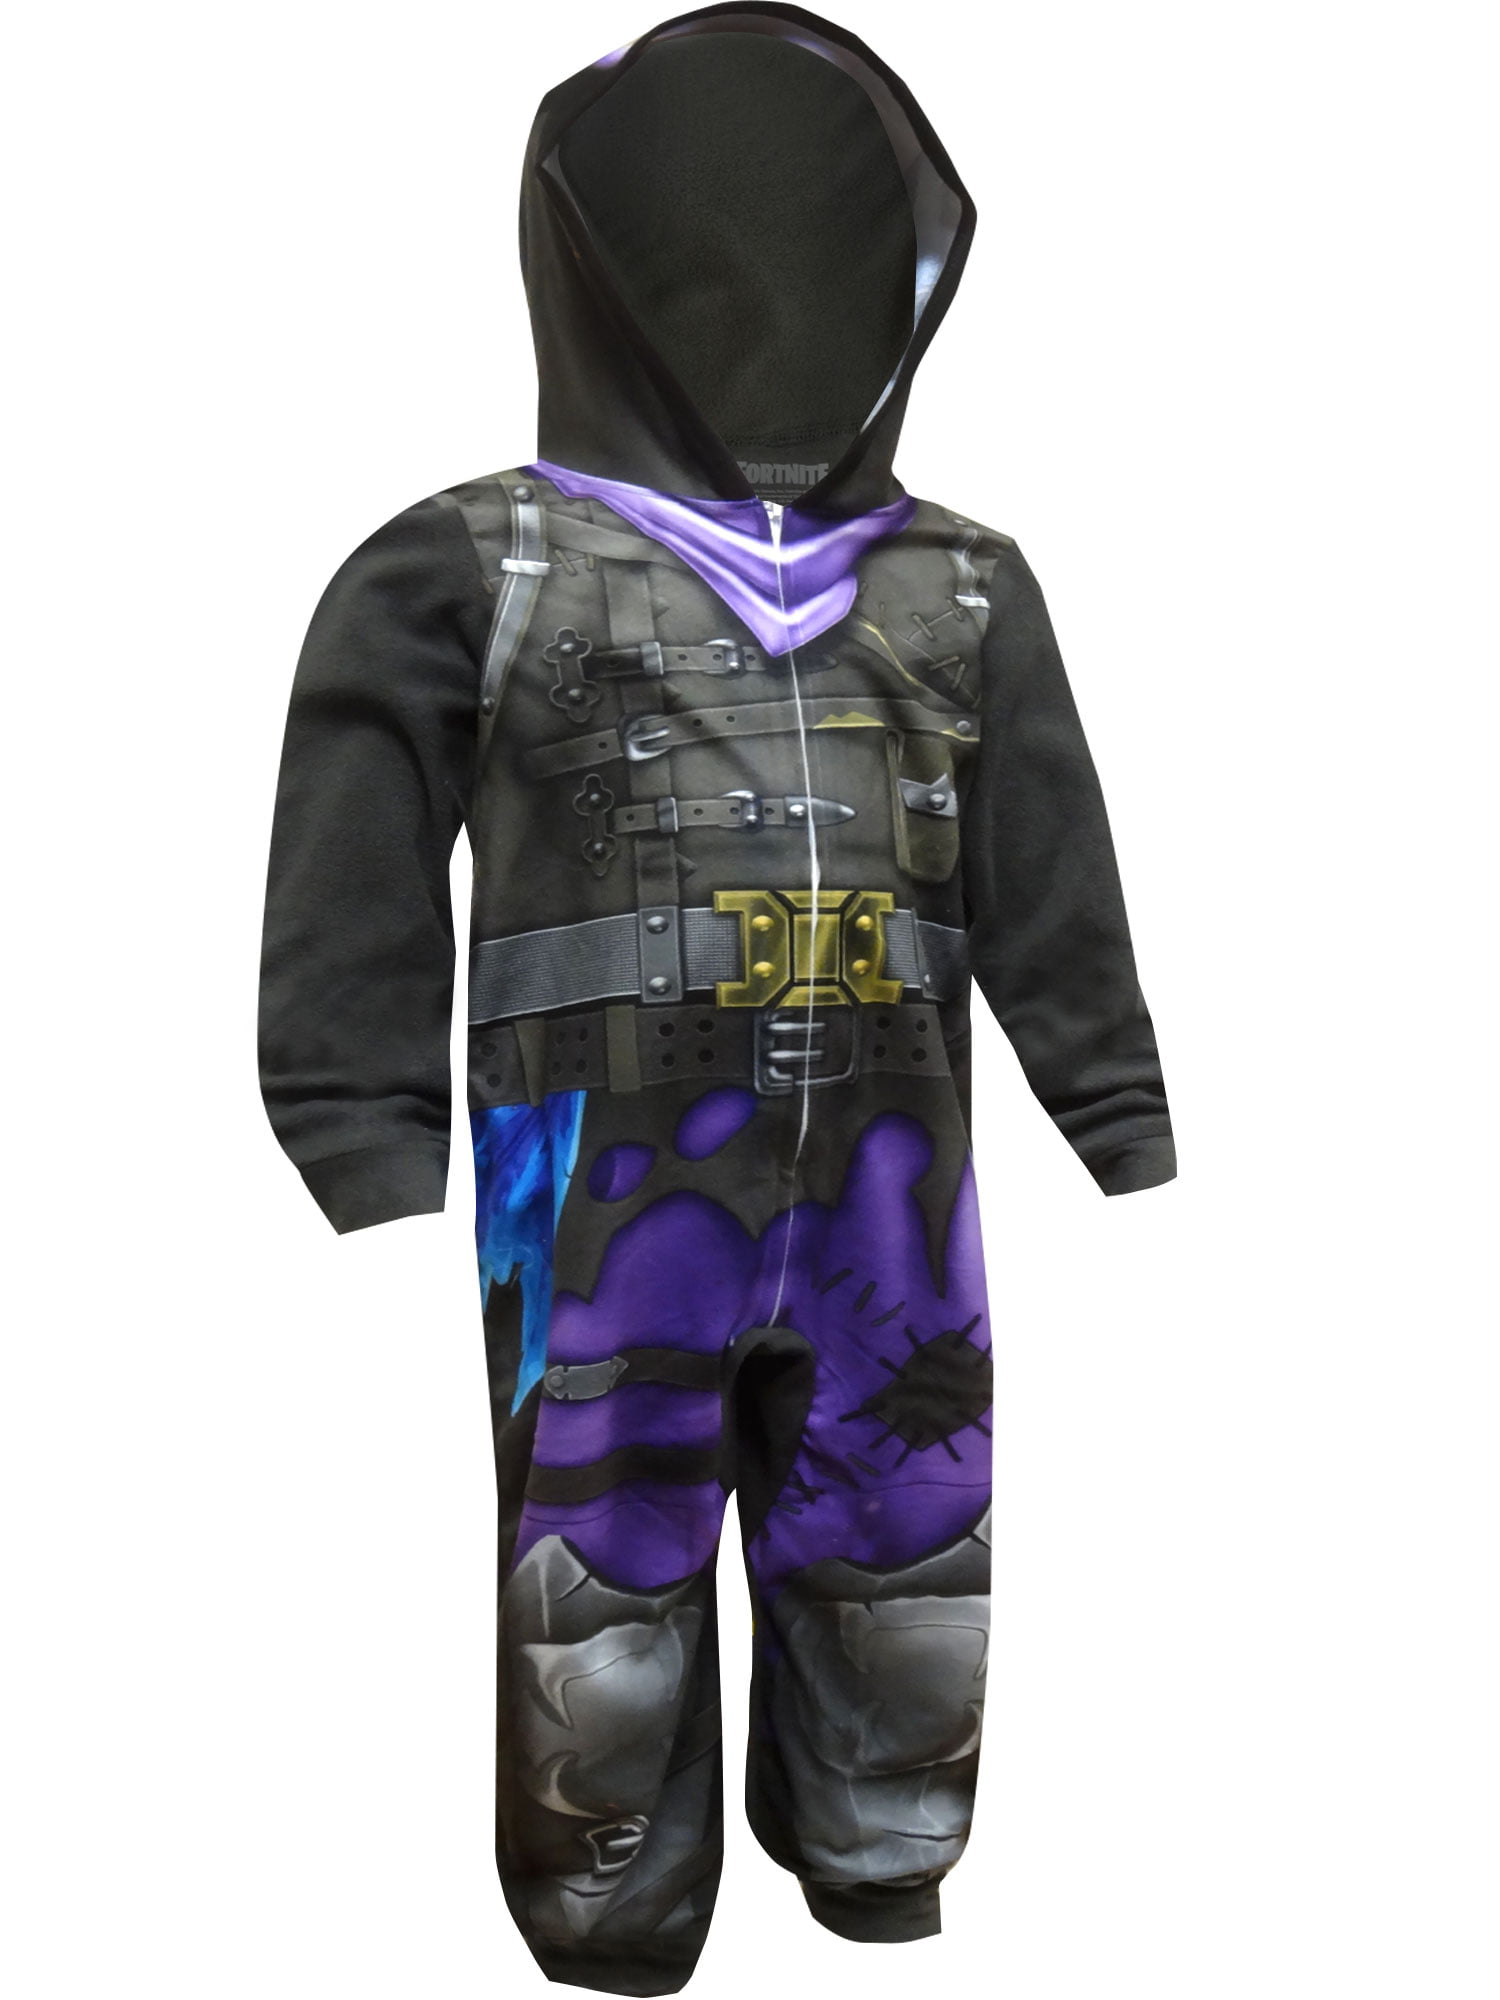 AME Sleepwear - Fortnite Boys Raven Bird Union Suit ... - 1500 x 2000 jpeg 187kB